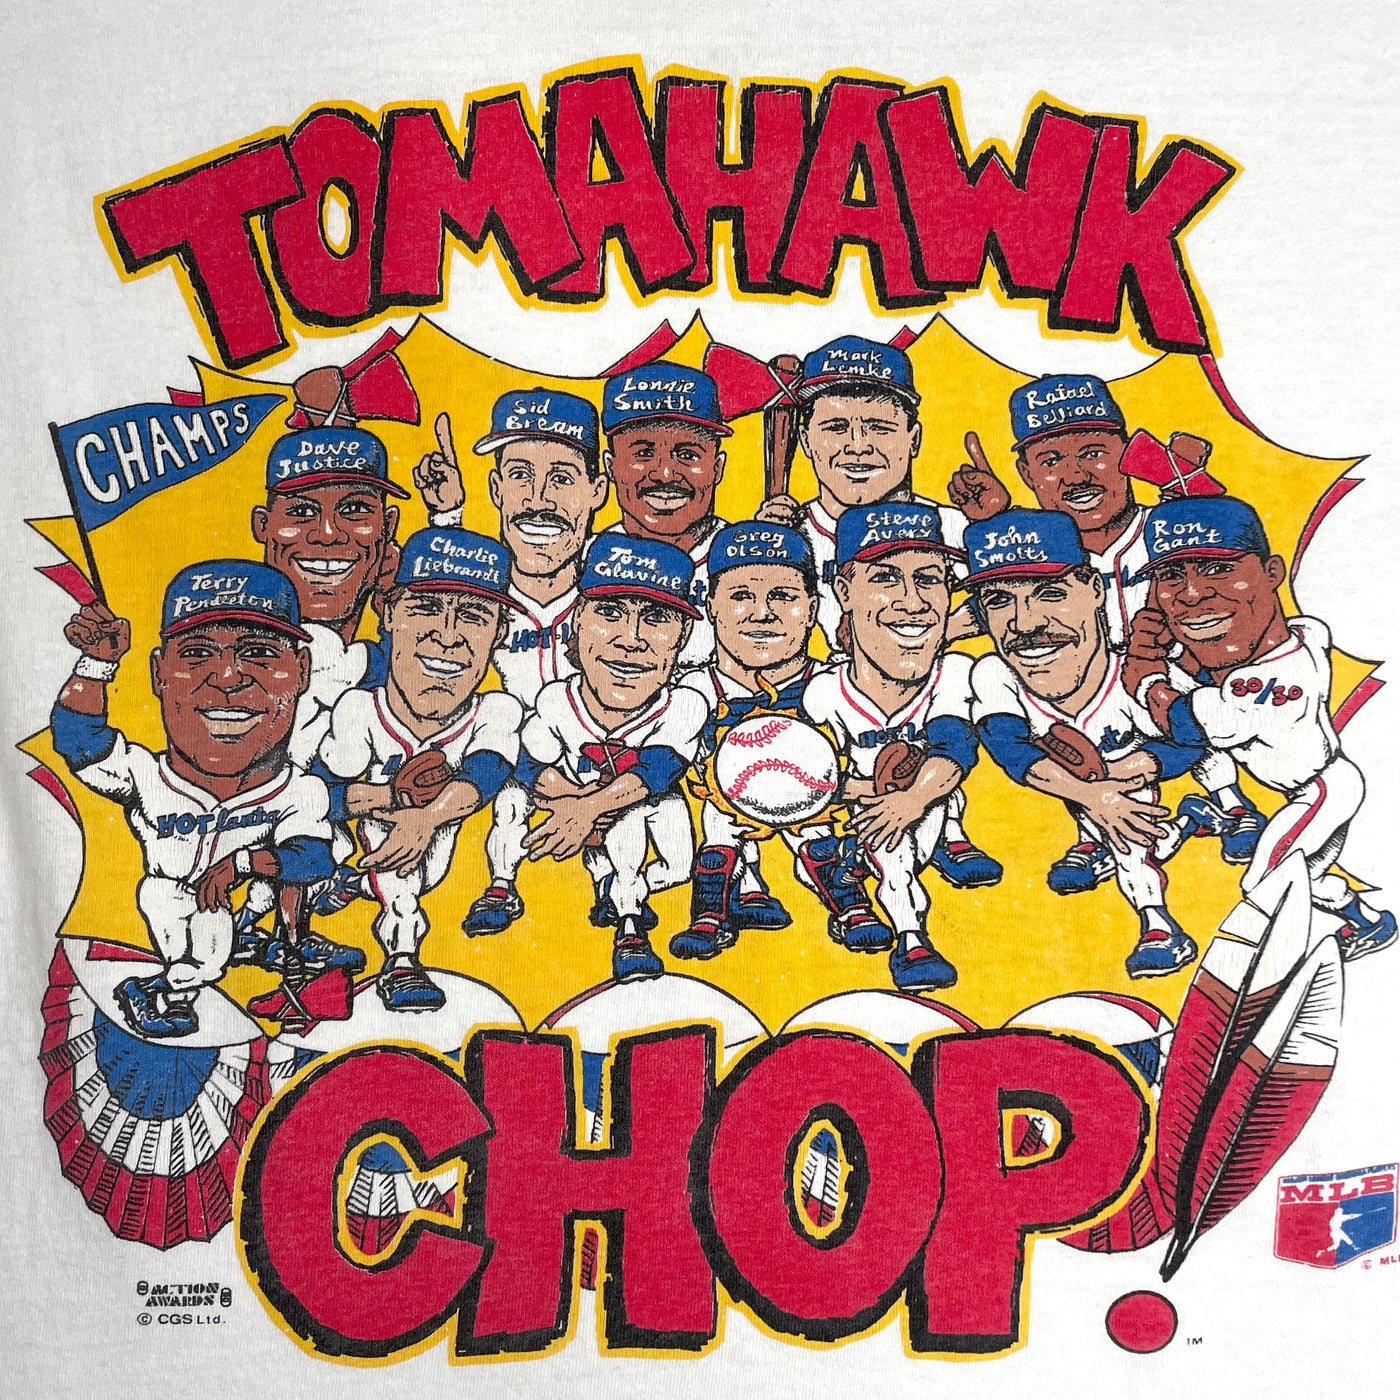 90's Atlanta Braves Tomahawk ChopWhite Sports T-shirt sz L